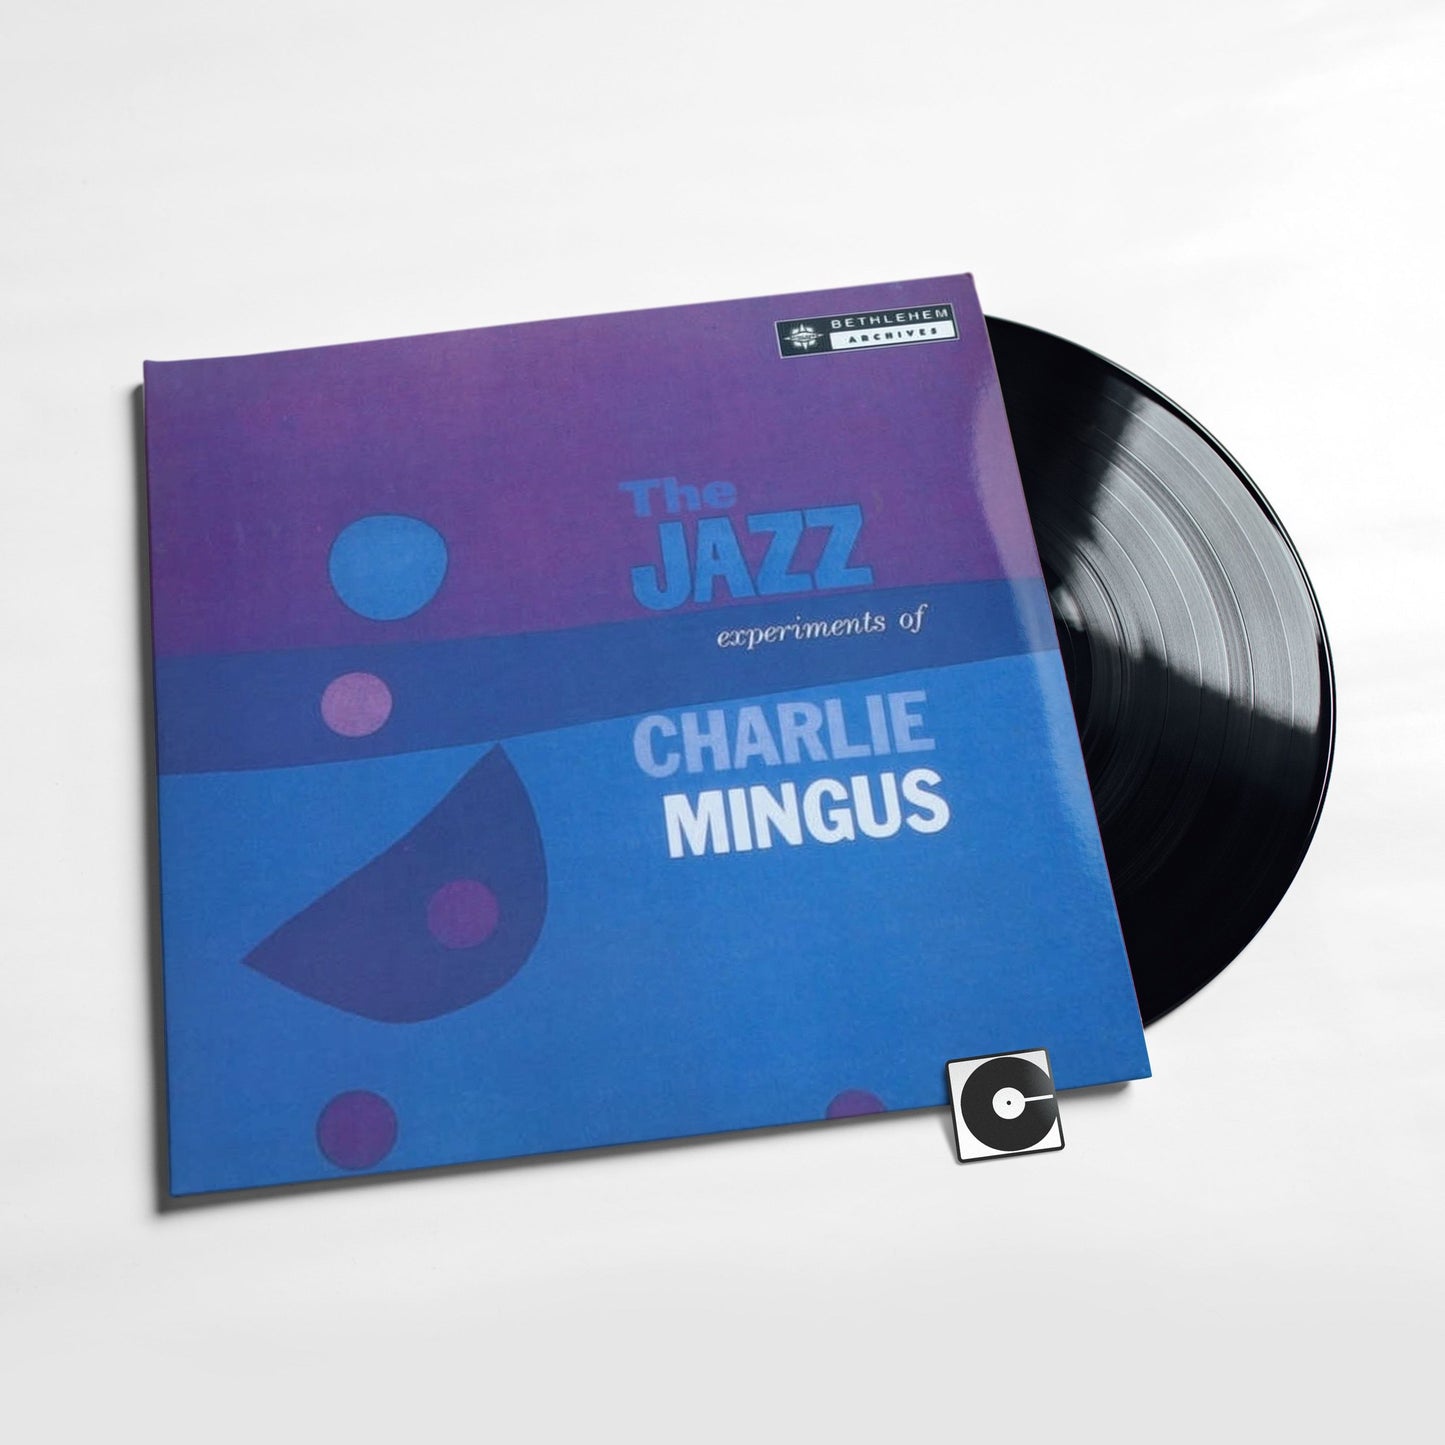 Charles Mingus - "The Jazz Experiments of Charles Mingus"